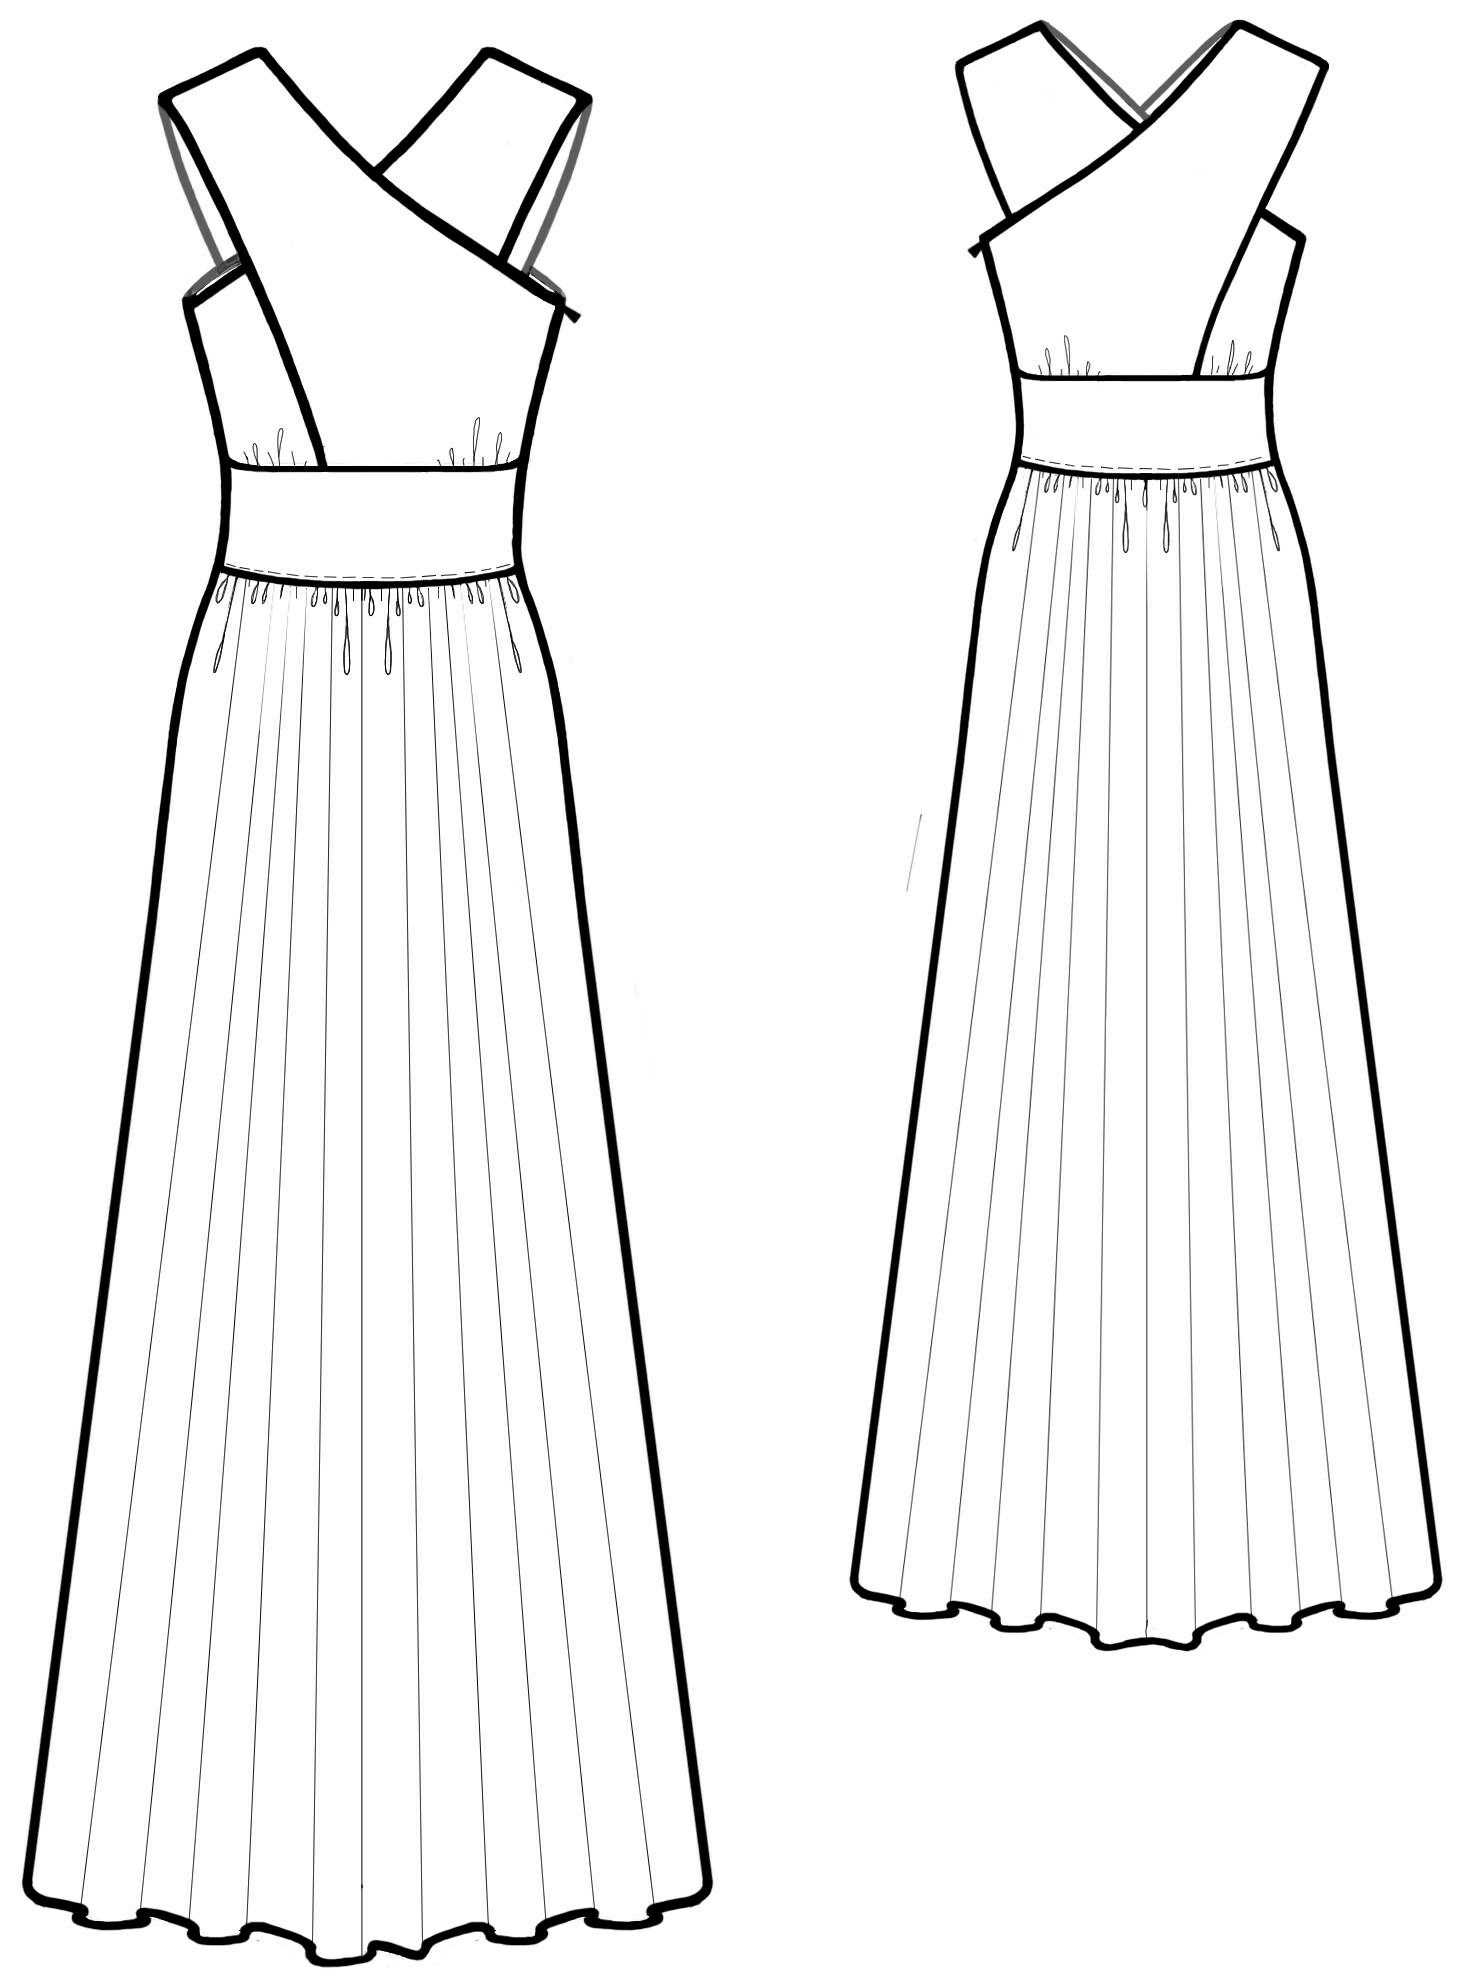 Printable Dress Patterns Free Printable Templates